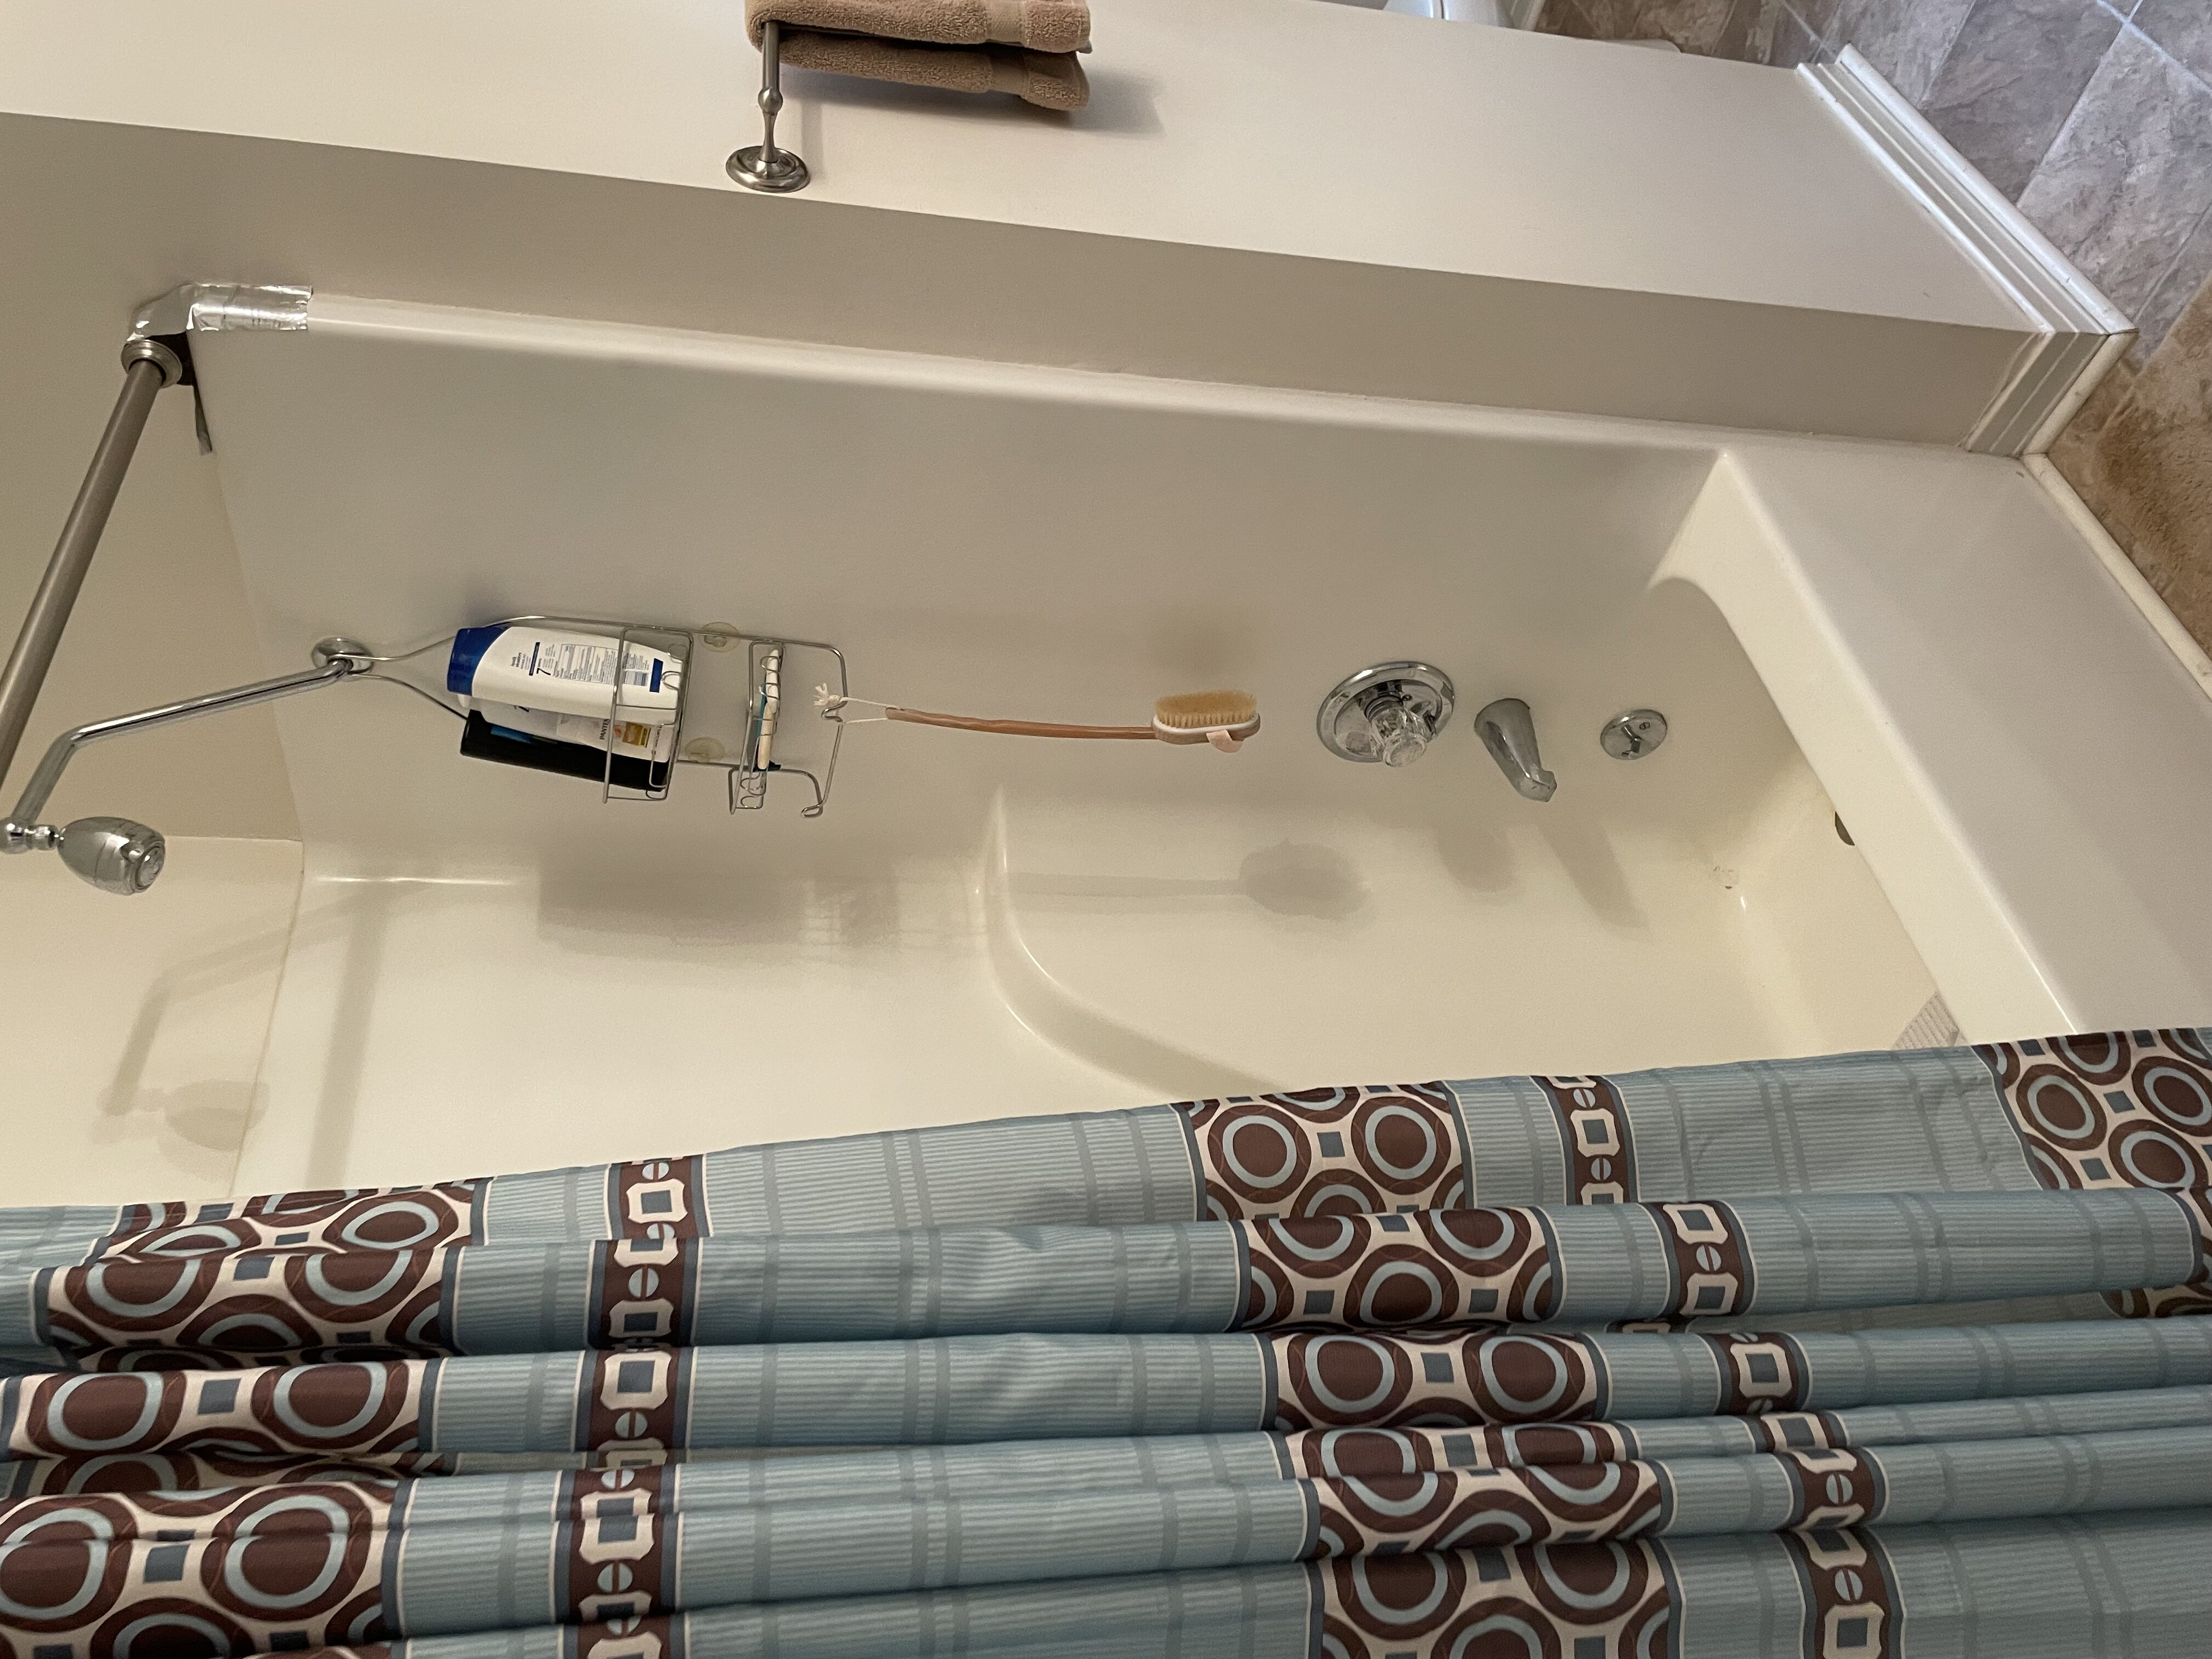 Before, basic tub/shower combo